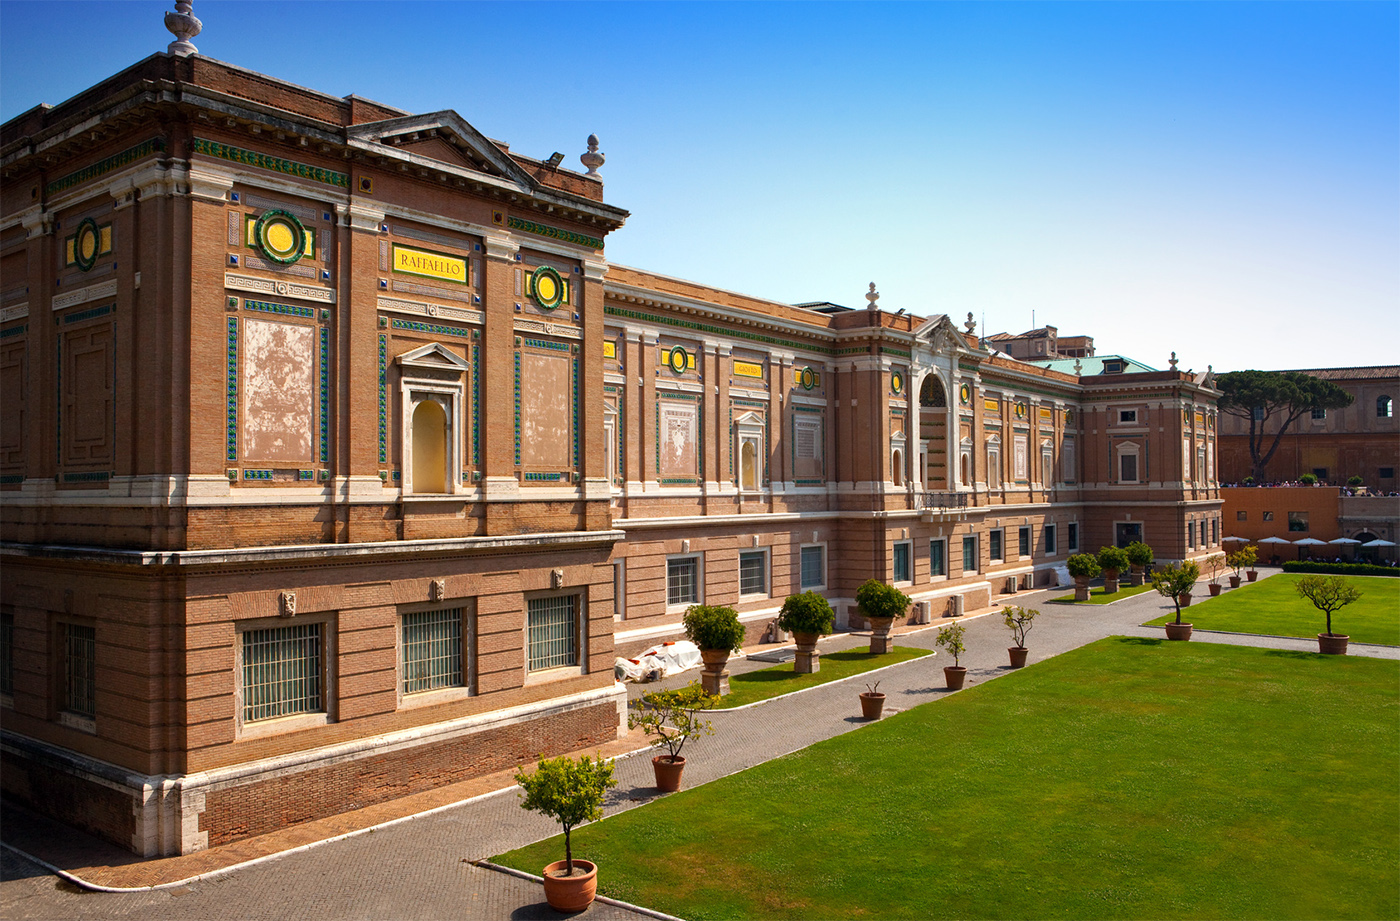 El edificio que alberga la Pinacoteca Vaticana